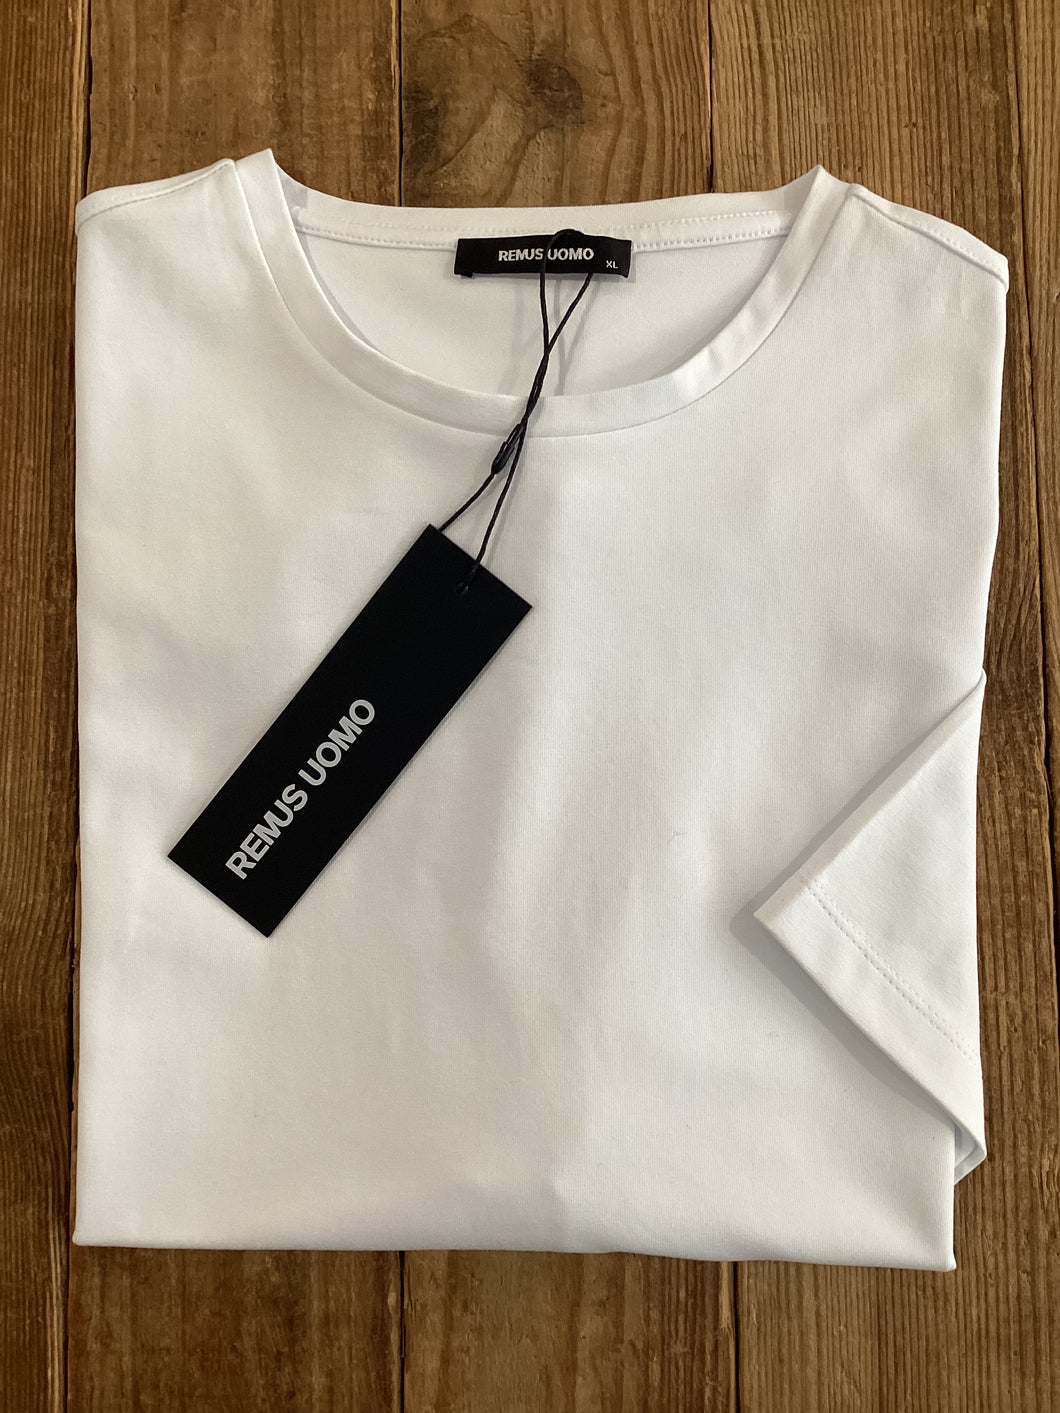 Remus Uomo - Plain T-Shirt White 507